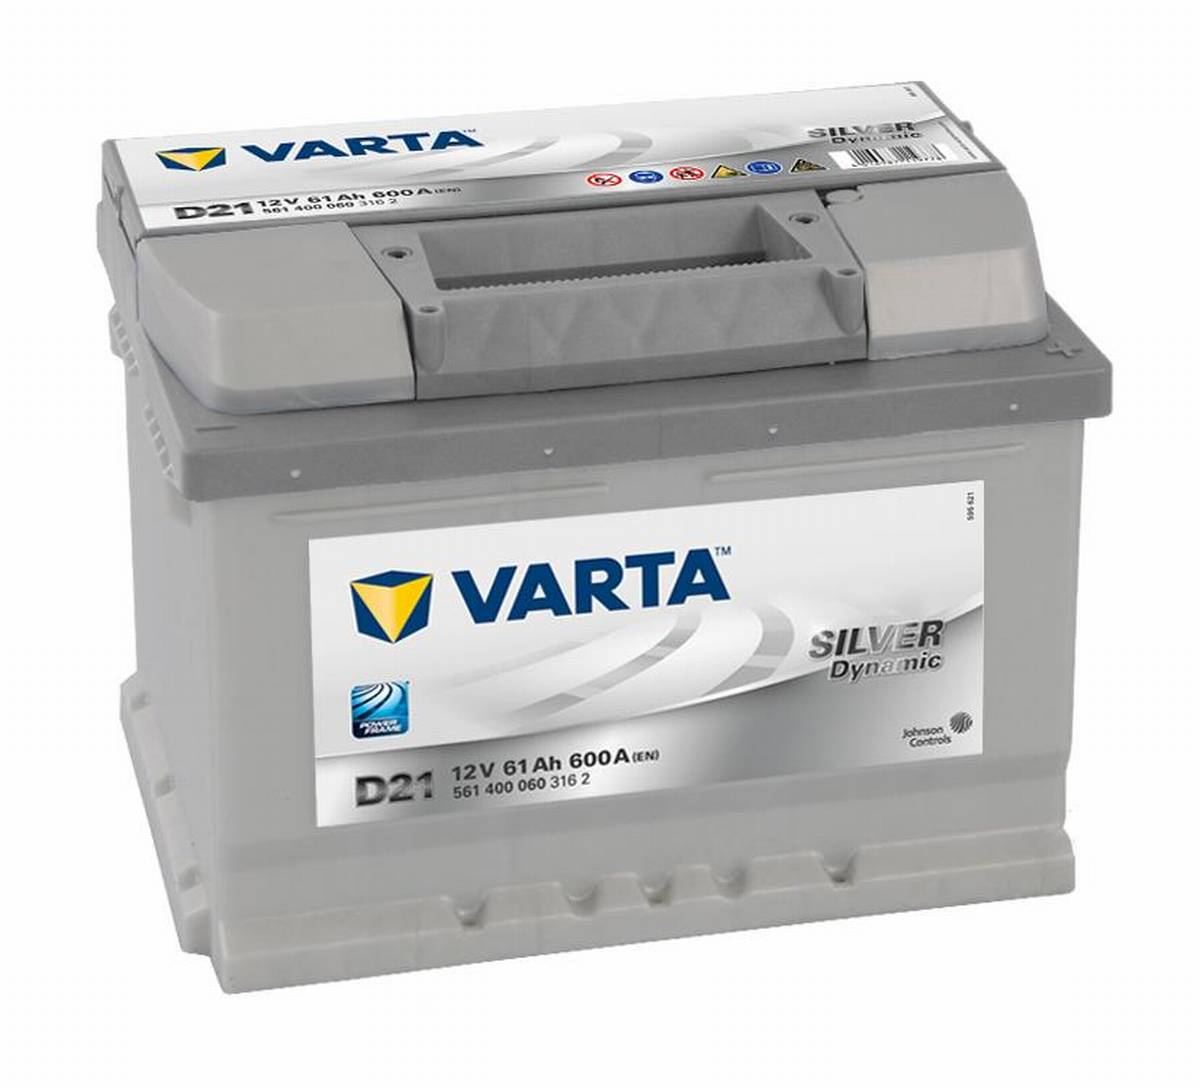 VARTA D21 Silver Dynamic 12V 61Ah 600A Autobatterie 561 400 060